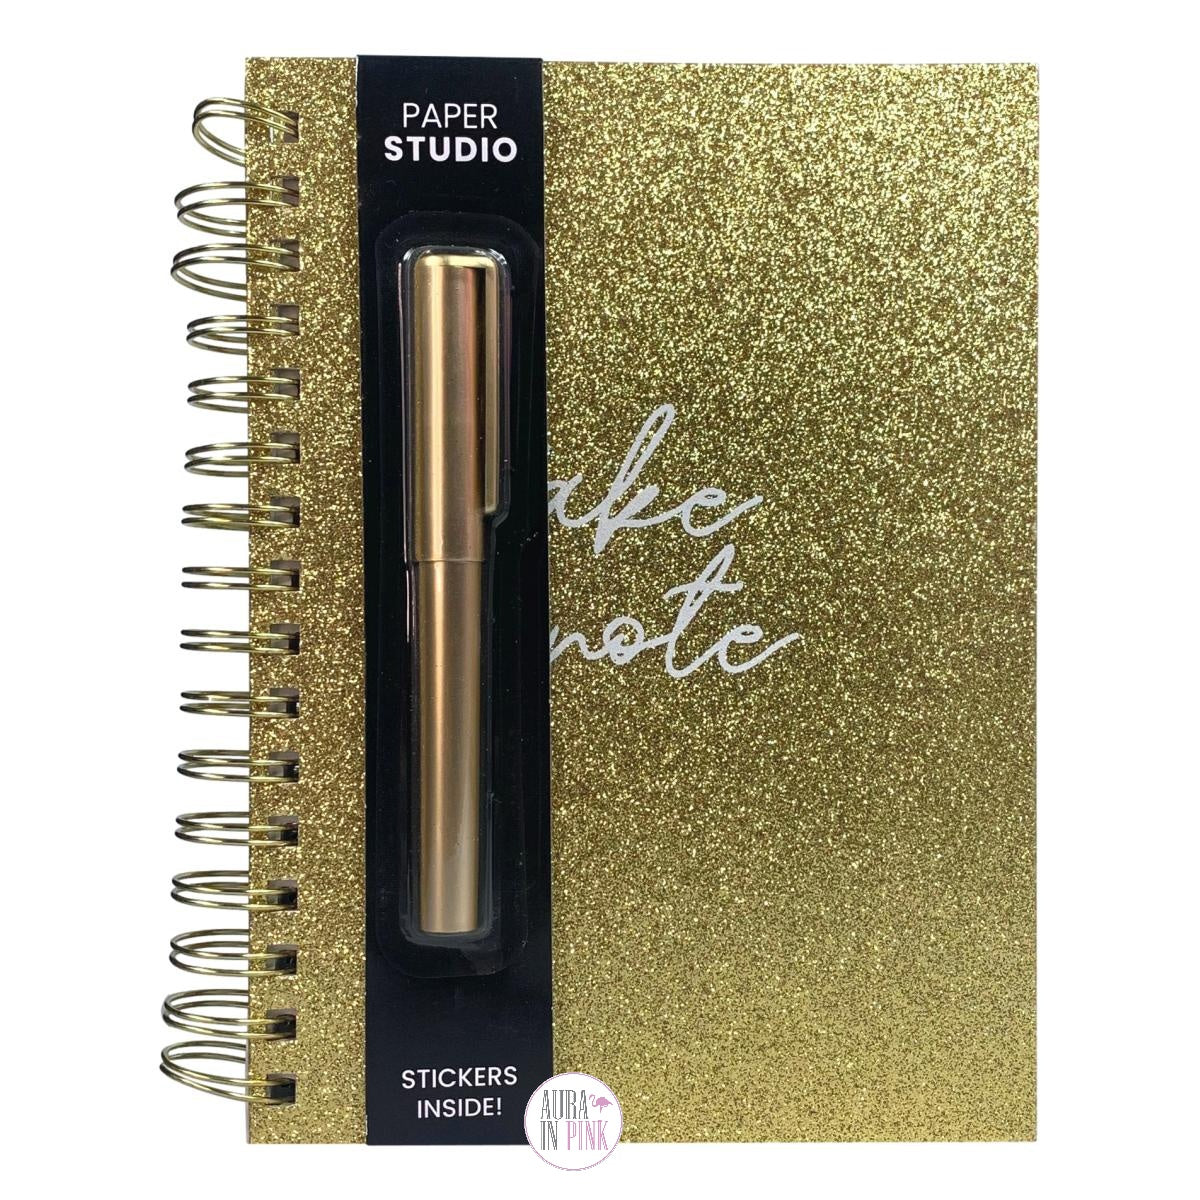 Paper Studio Gold Glitter Spiral-Bound Notebook w/Stickers & Pen